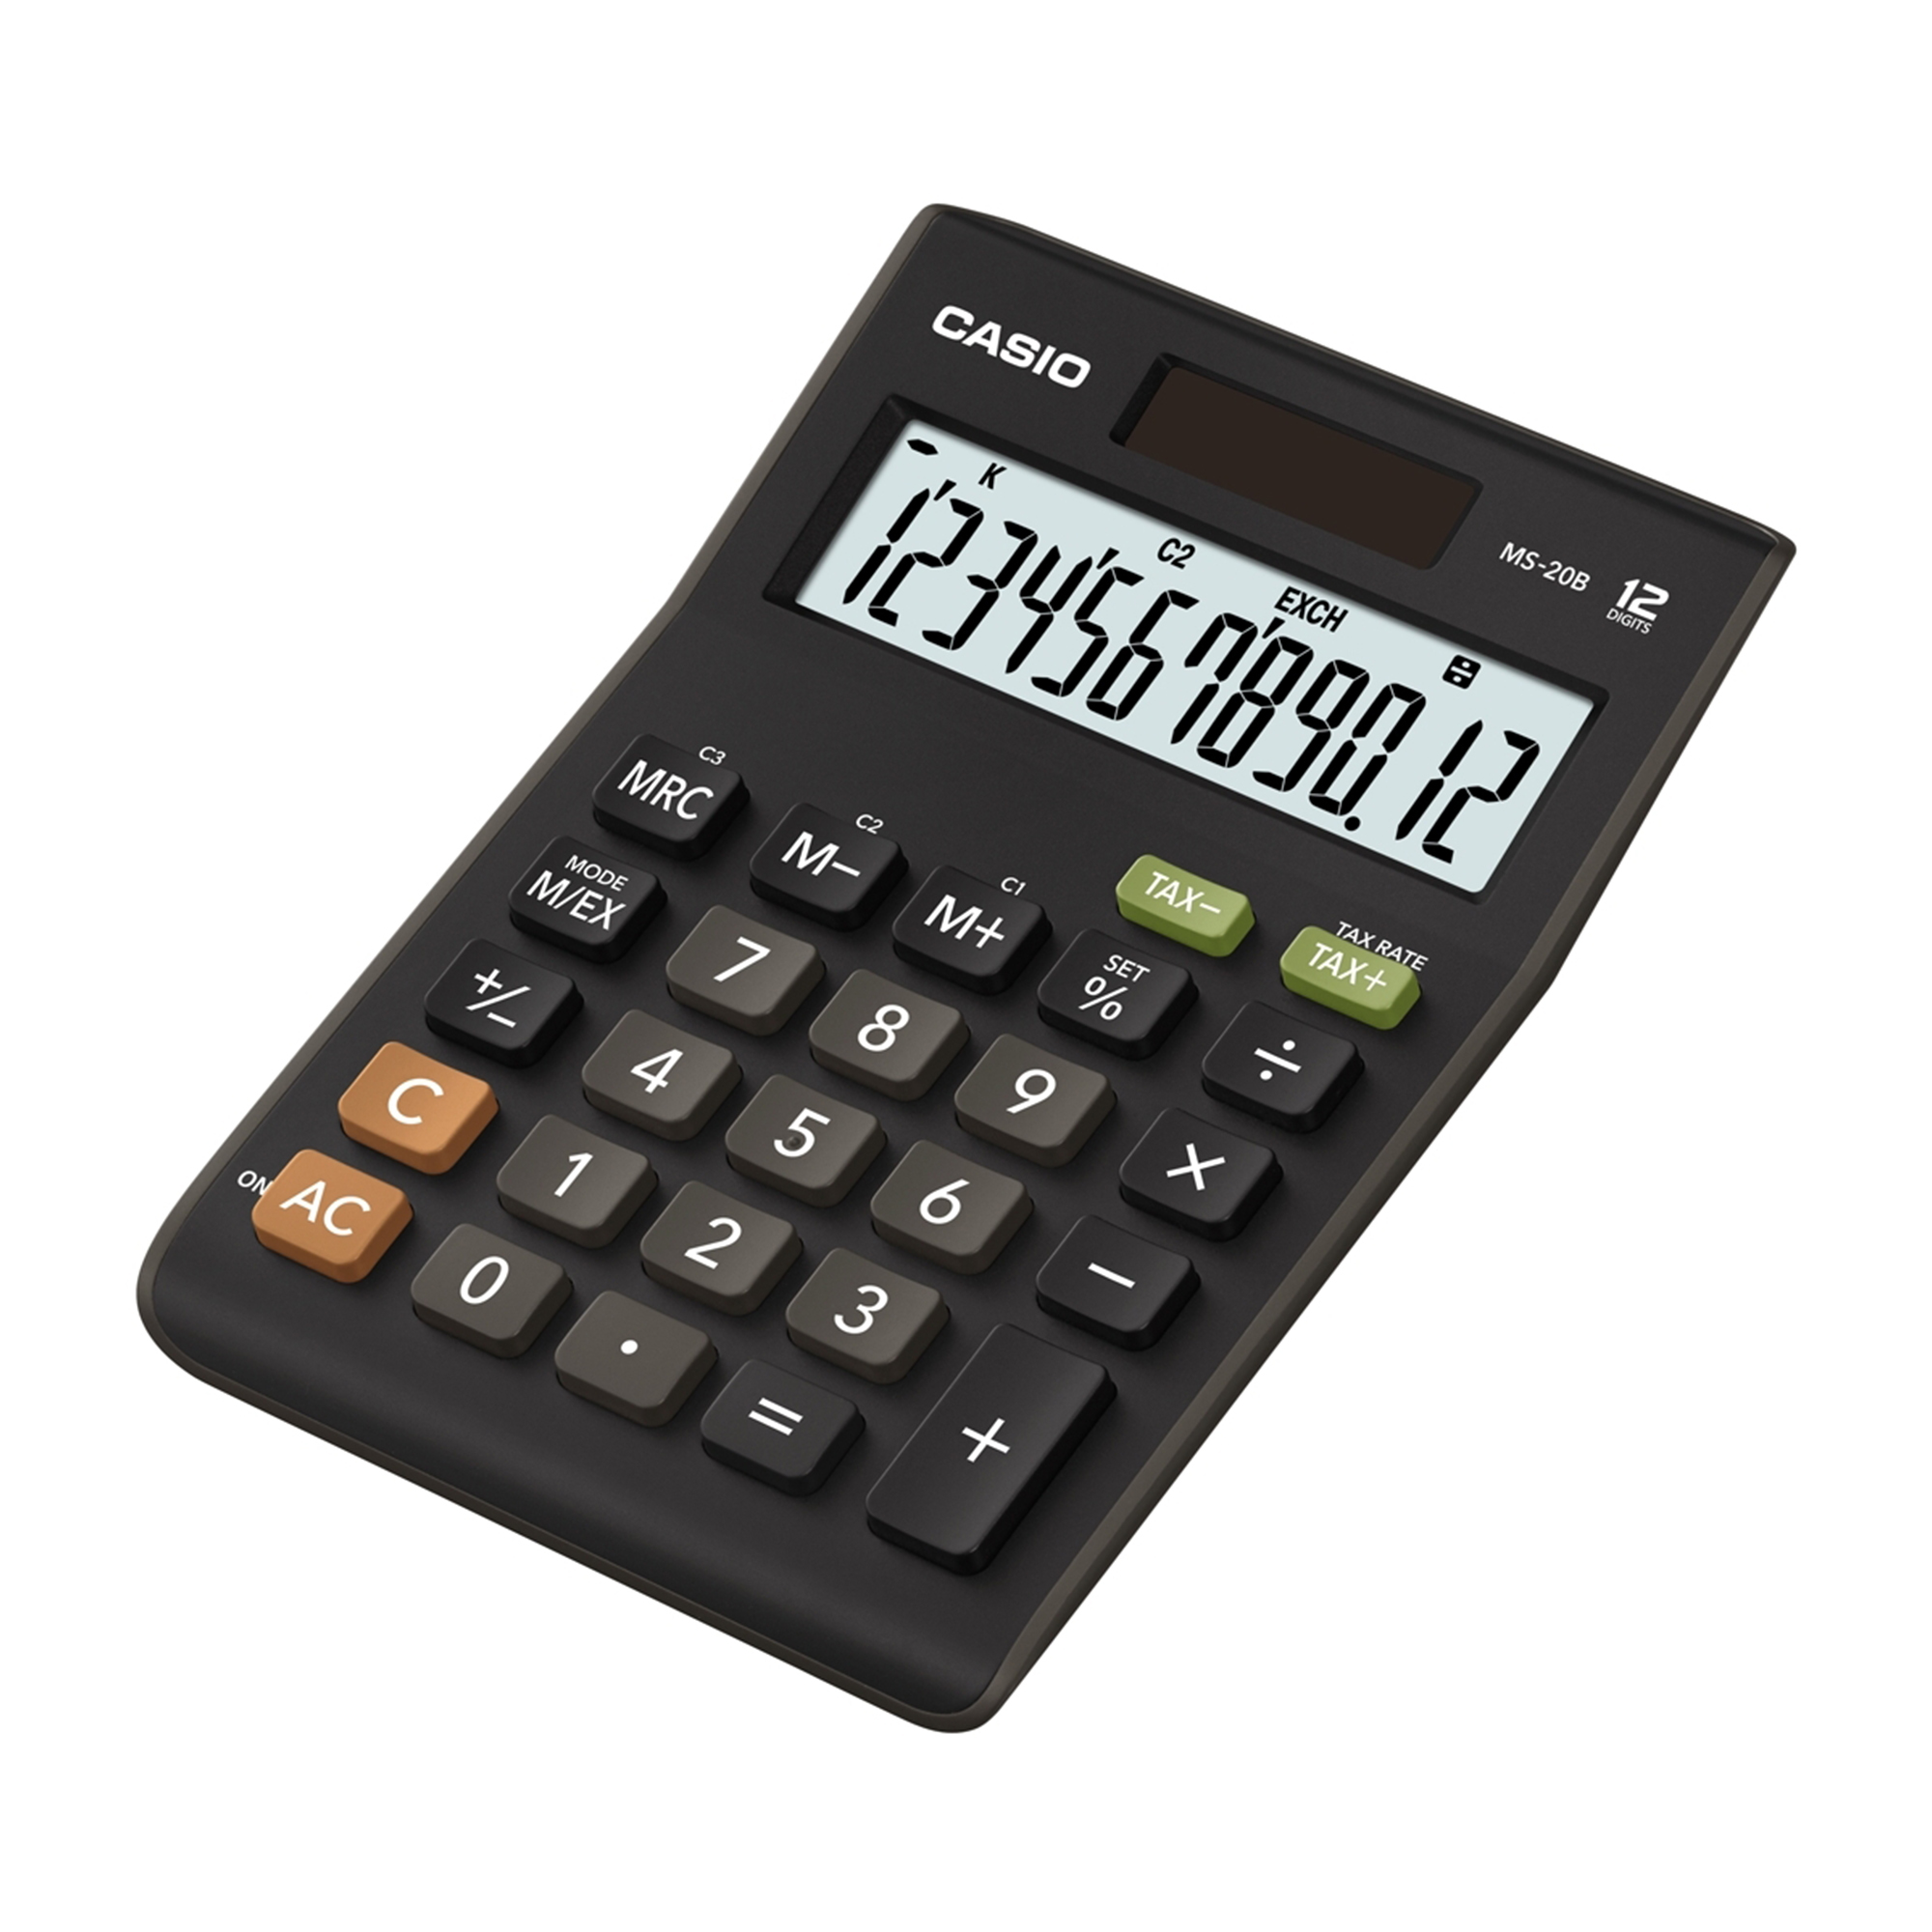 Kalkulator MS-20B-S - Kalkulatory.pl